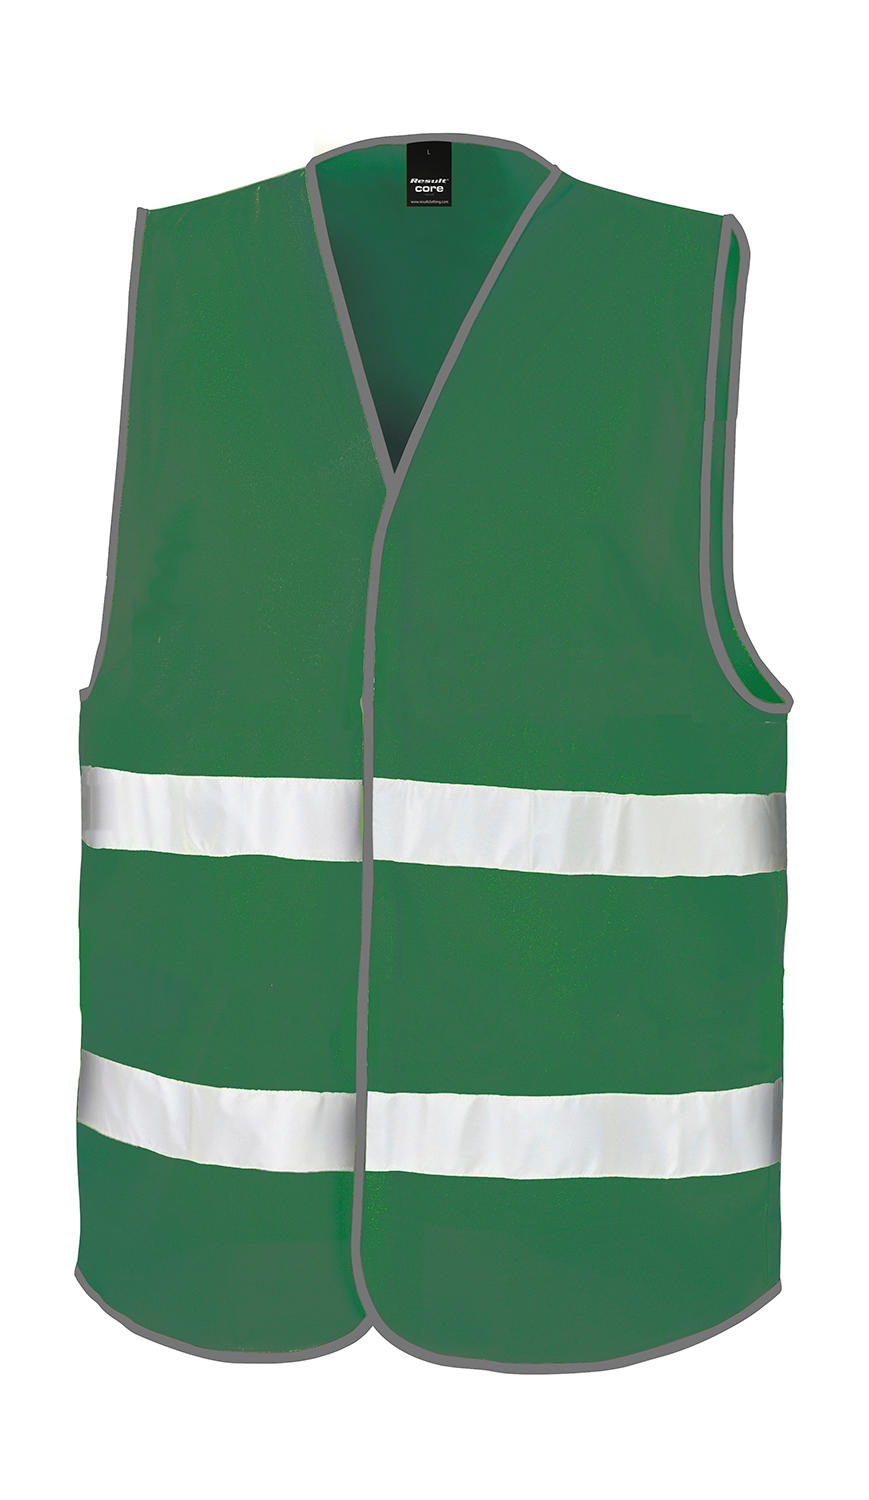 Core Enhanced Visibility Vest - paramedic green